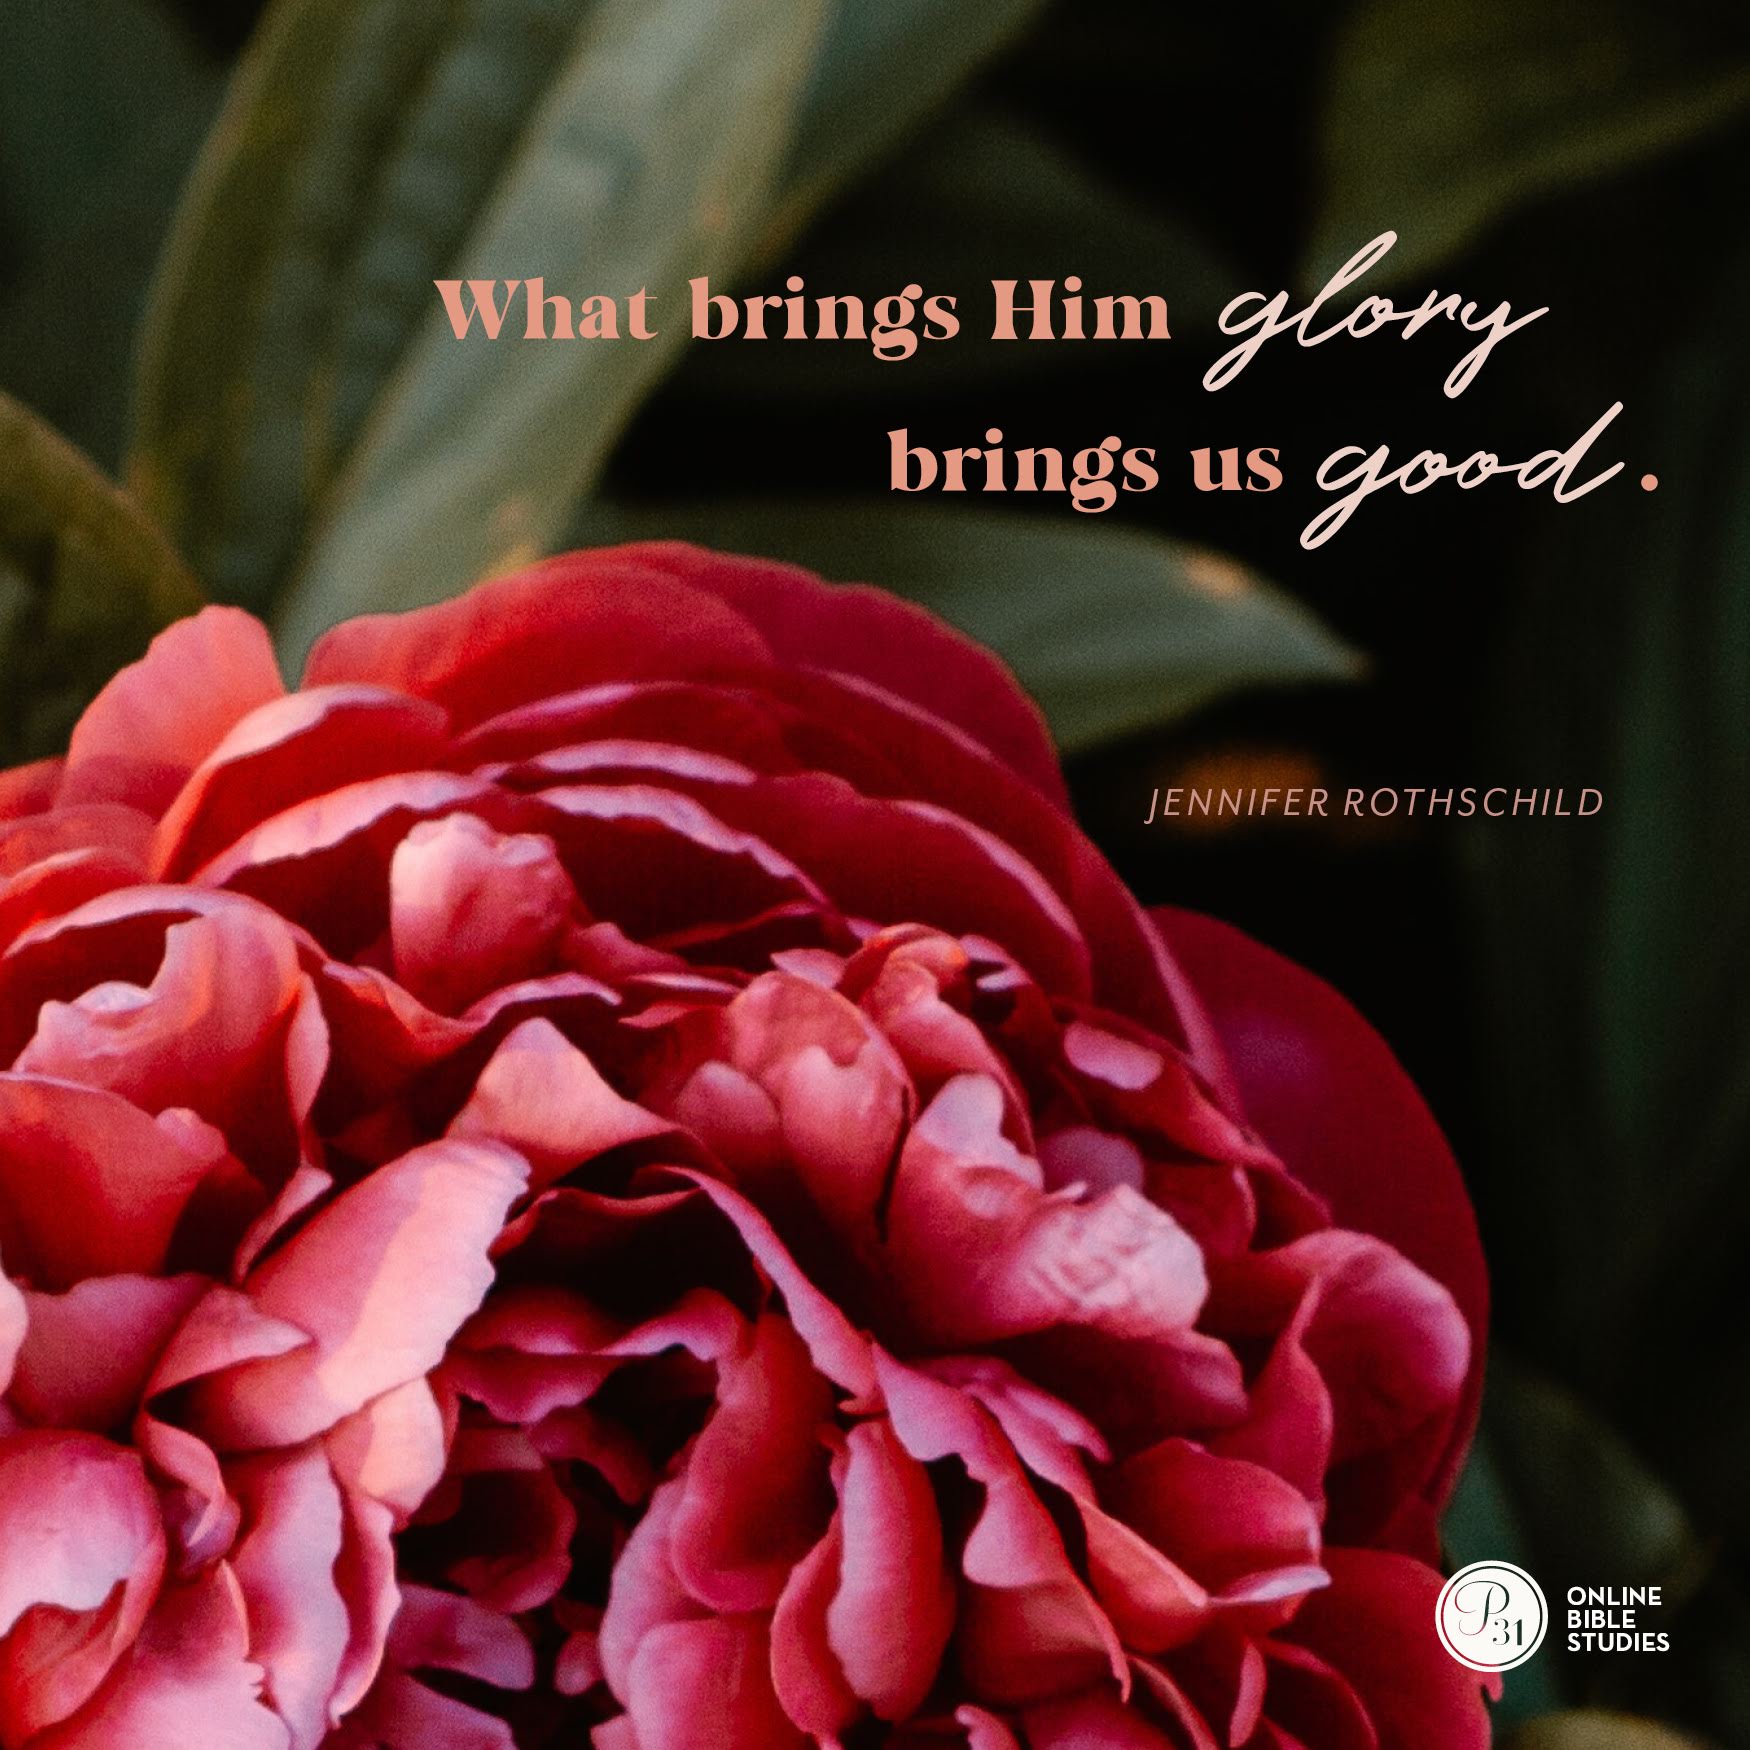  "What brings Him glory brings us good." - Jennifer Rothschild  #Psalm23Study | Proverbs 31 Online Bible Studies Week 3 #P31OBS